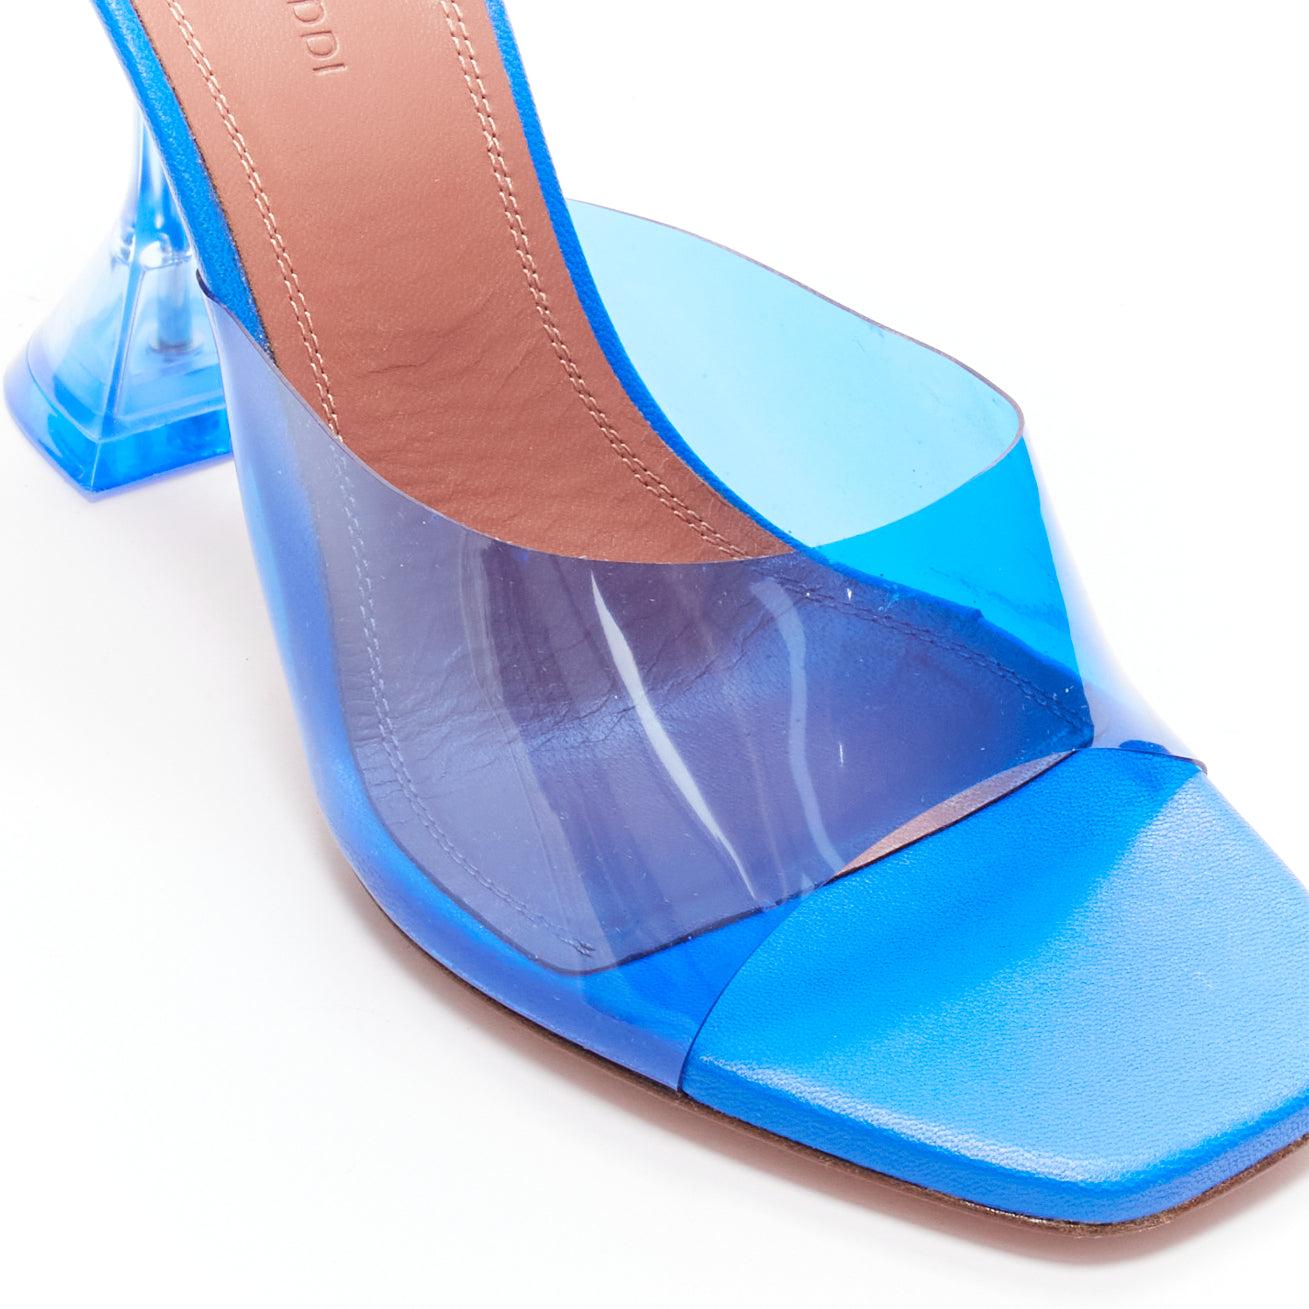 AMINA MUADDI Lupita blue clear PVC spool lucite heel sandal EU37.5 For Sale 2